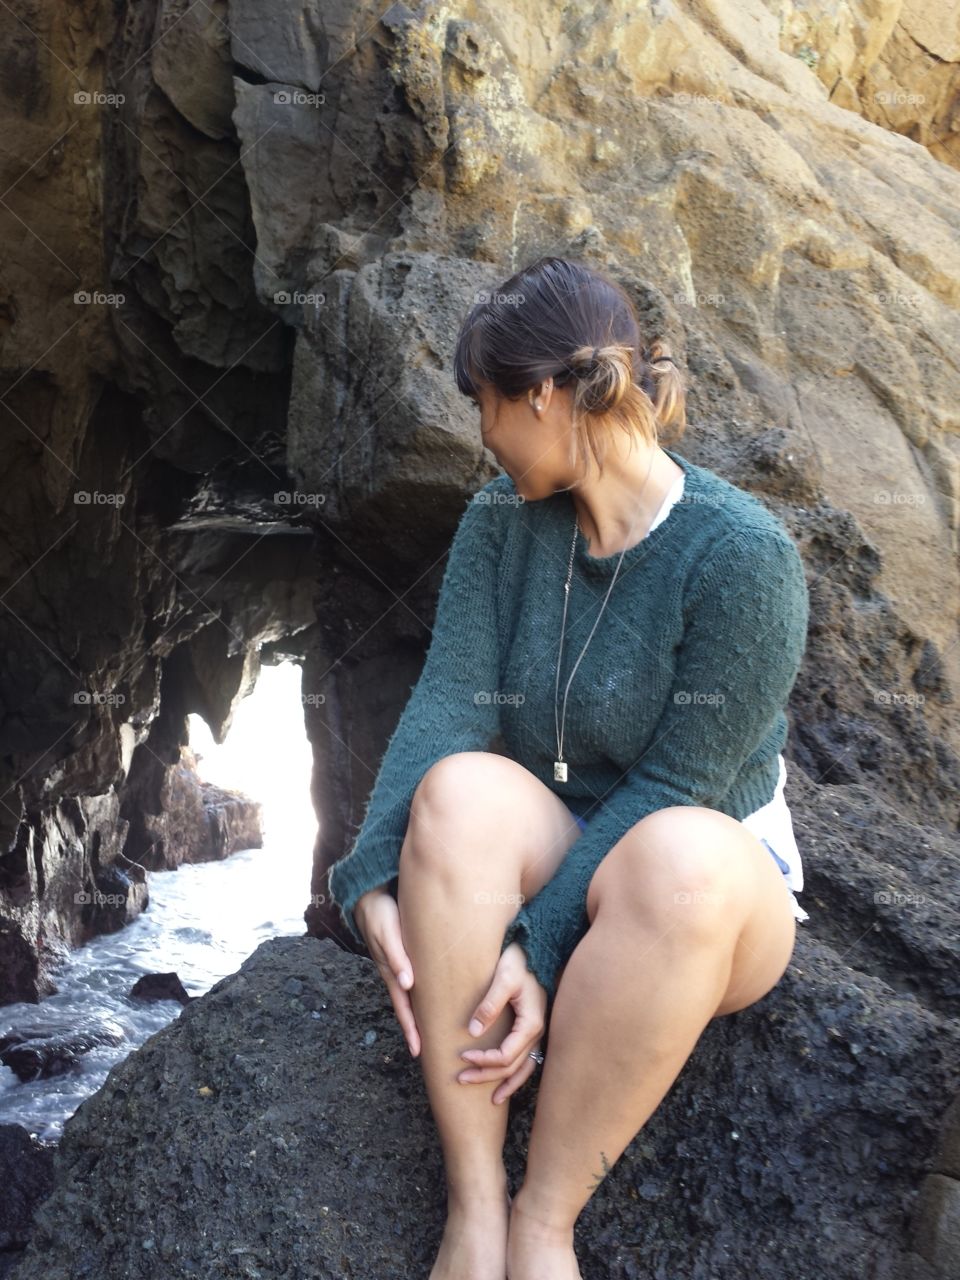 Caves. Climbing rocks at Pfeiffer Beach 